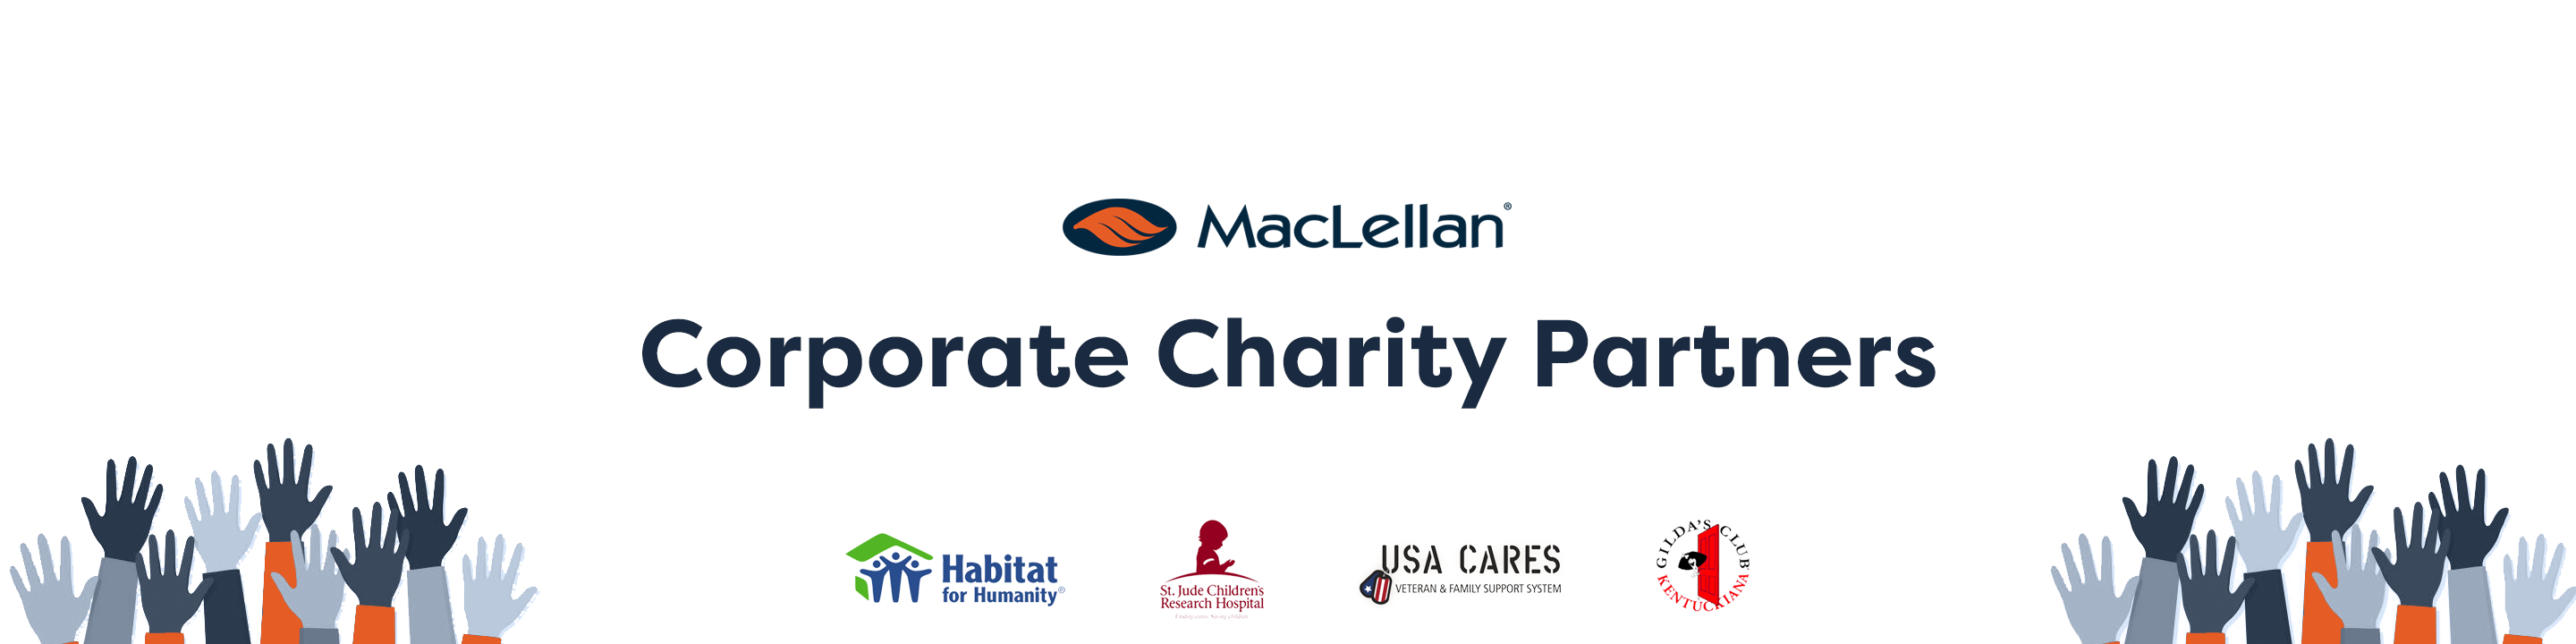 MacLellan Corporate Charity Partners